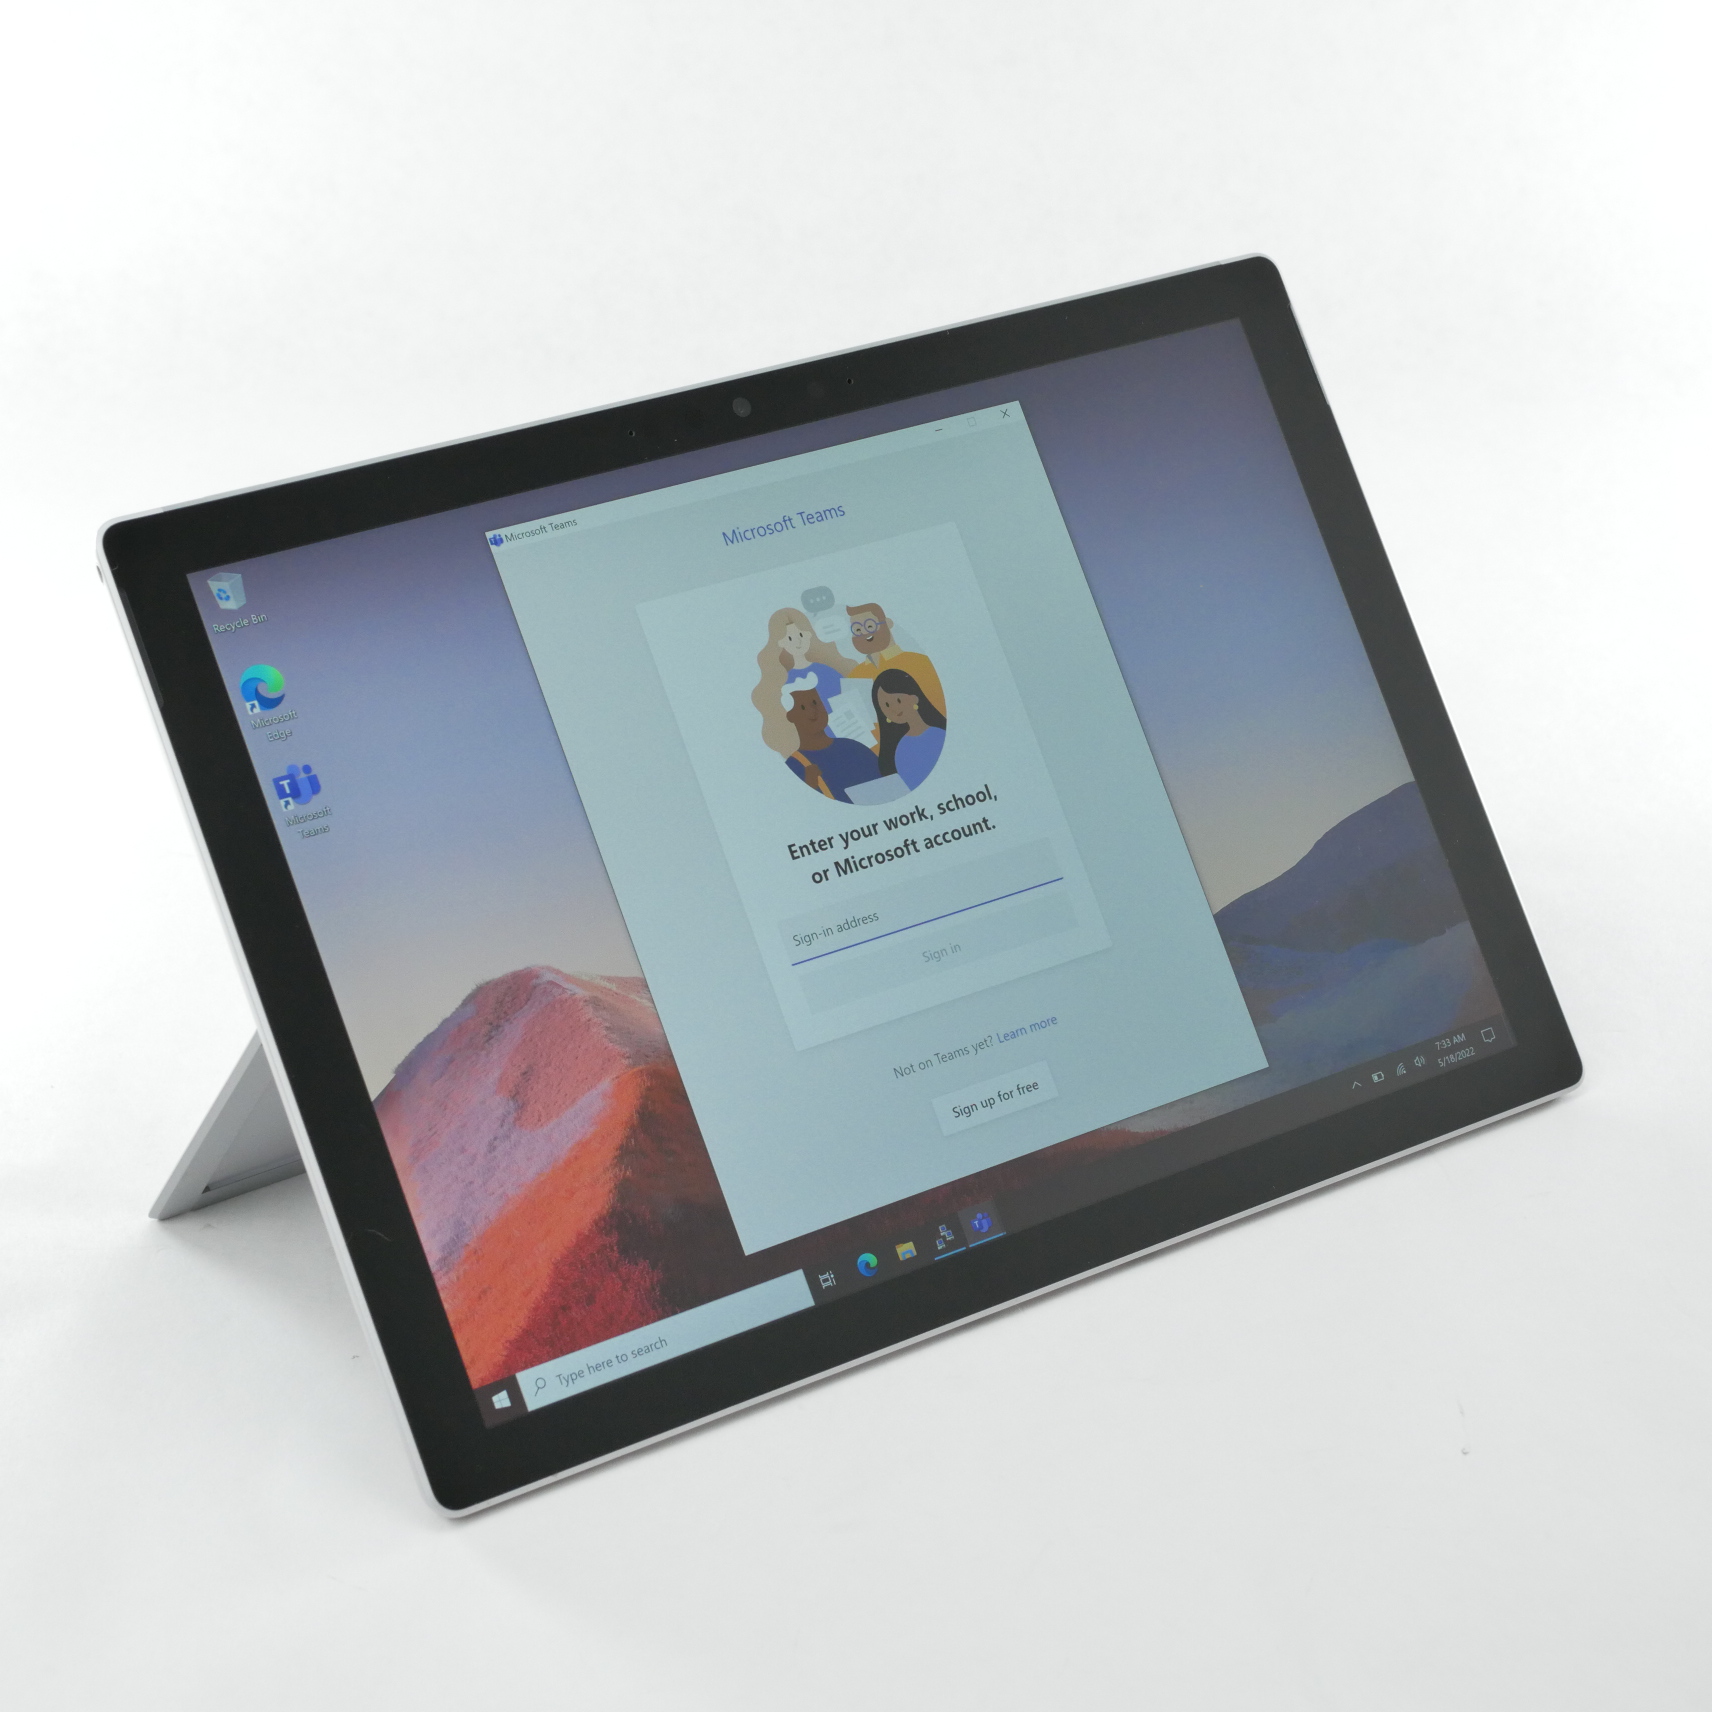 Microsoft Surface Pro 7 - Tablette - Intel Core i5 1035G4 / 1.1